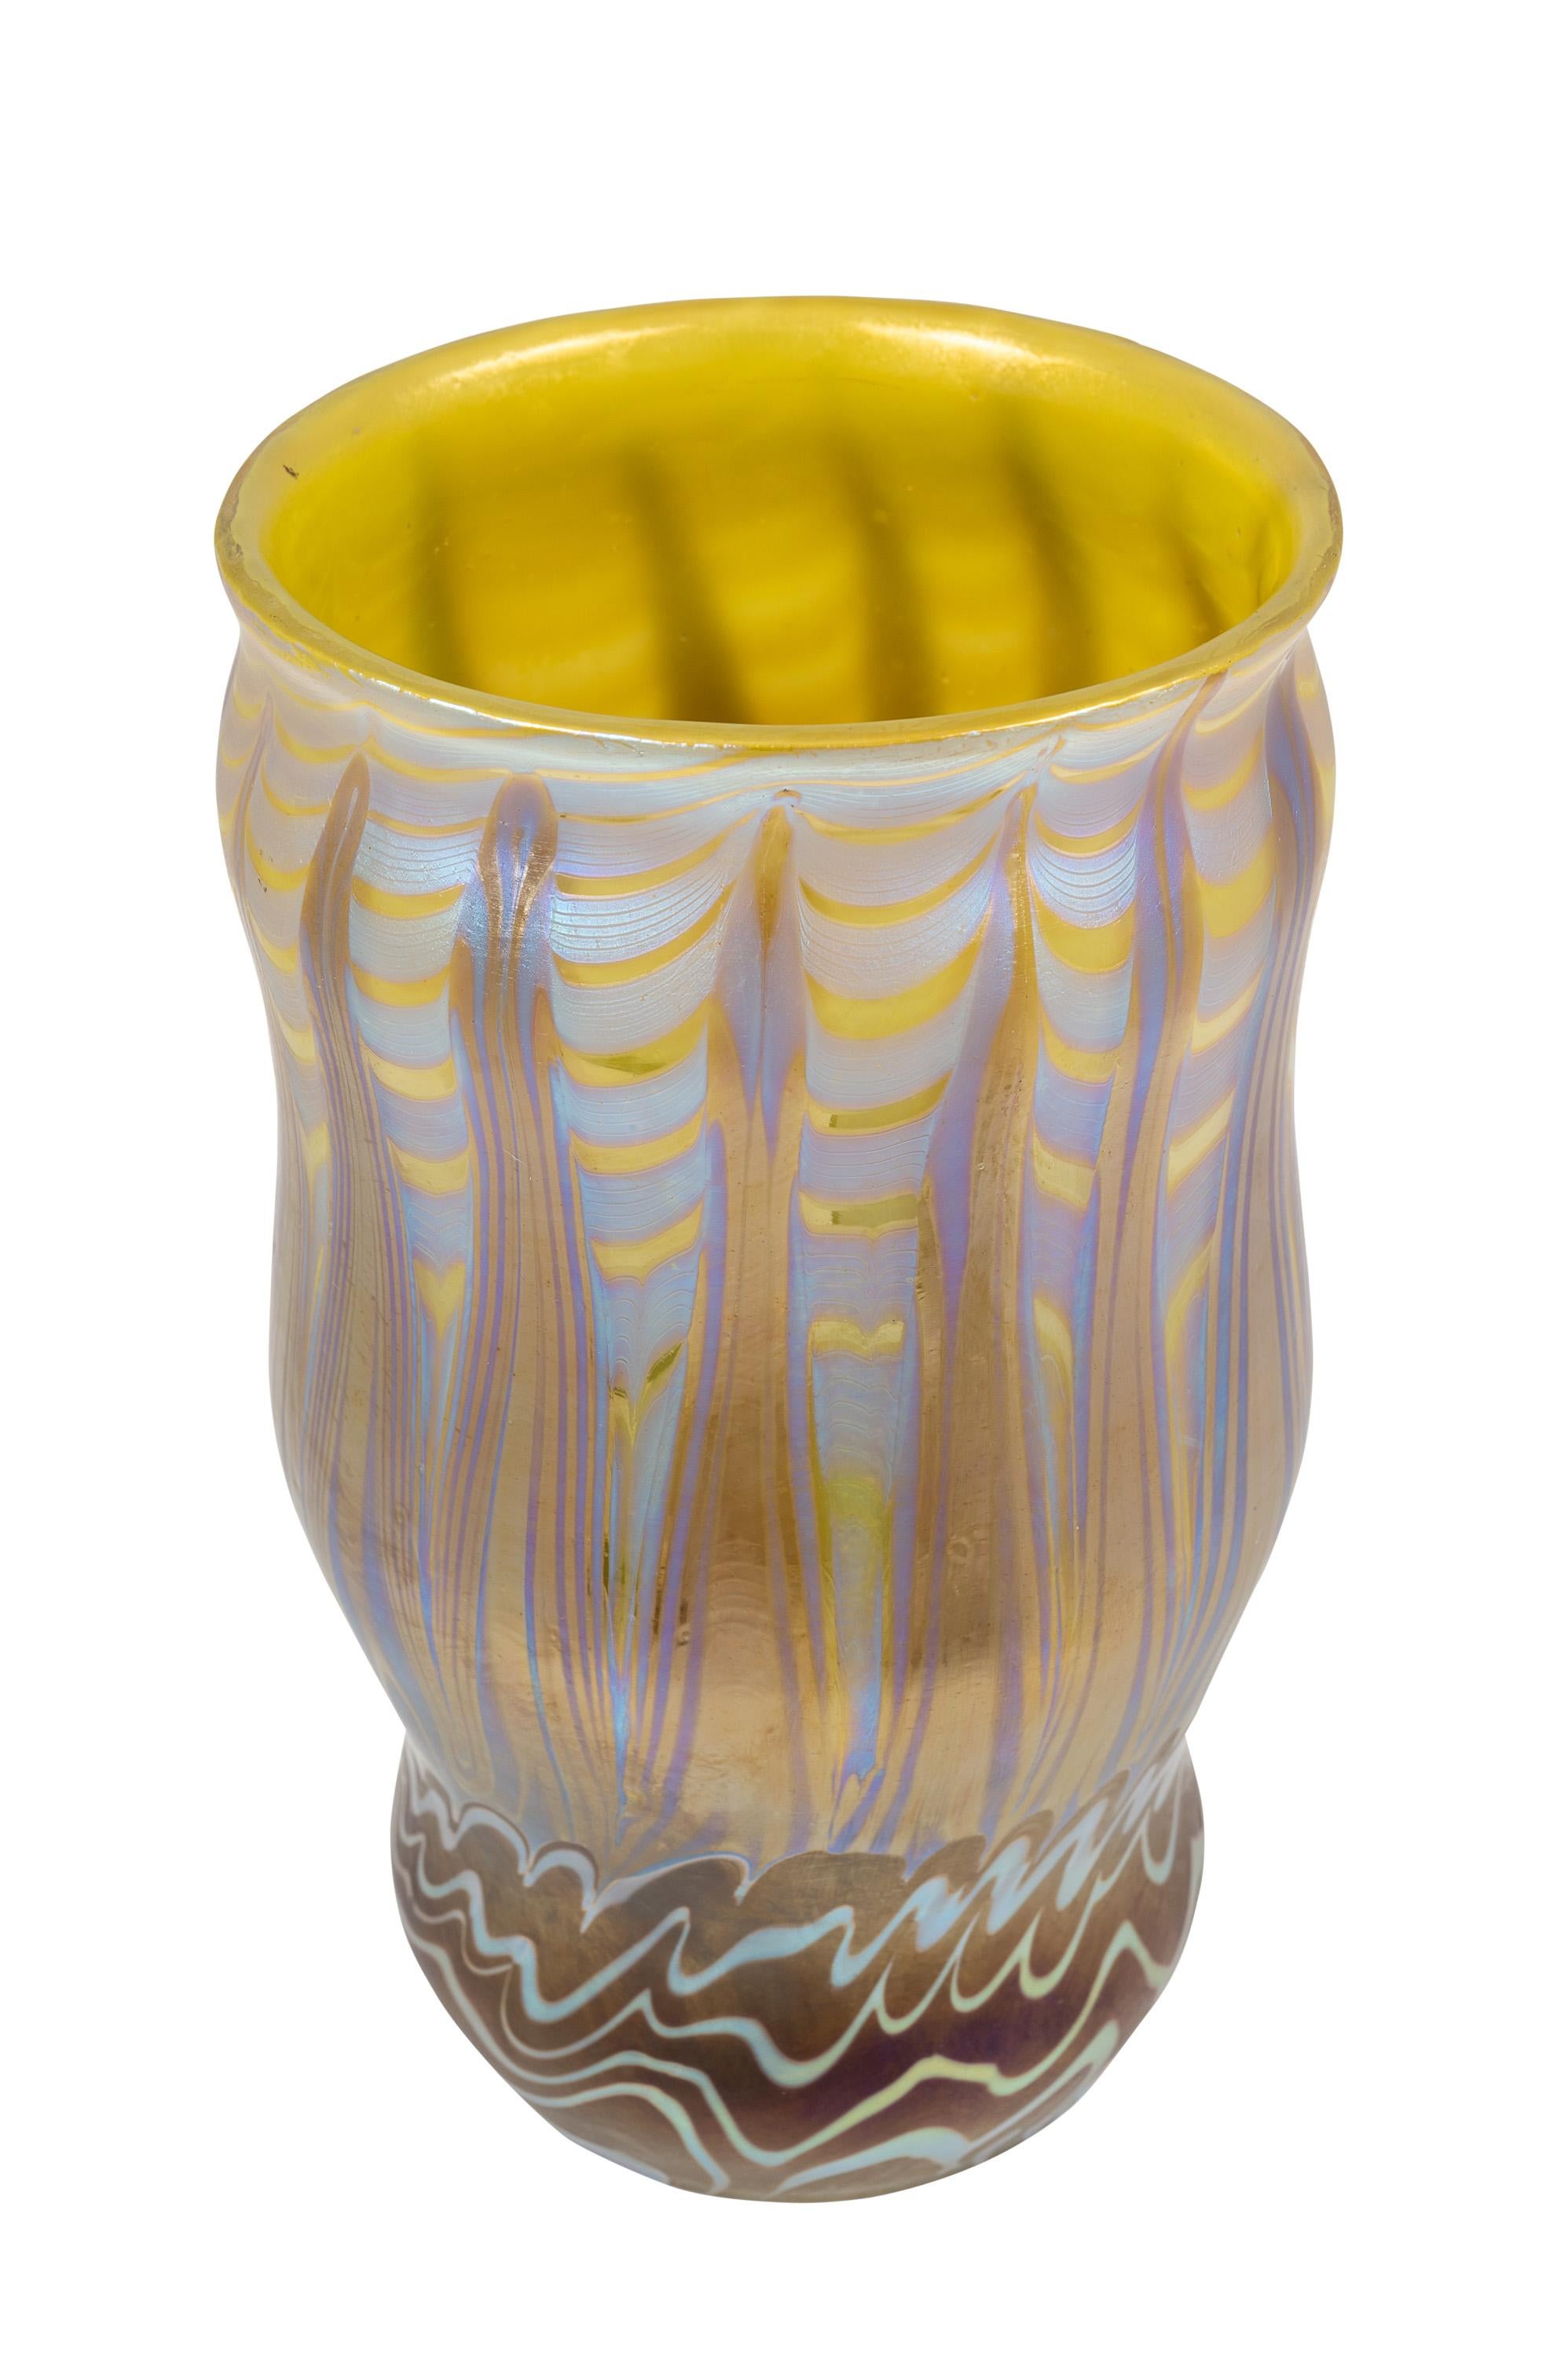 Austrian Bohemian Glass Vase Loetz circa 1900 Signed Art Nouveau Jugendstil Yellow Brown